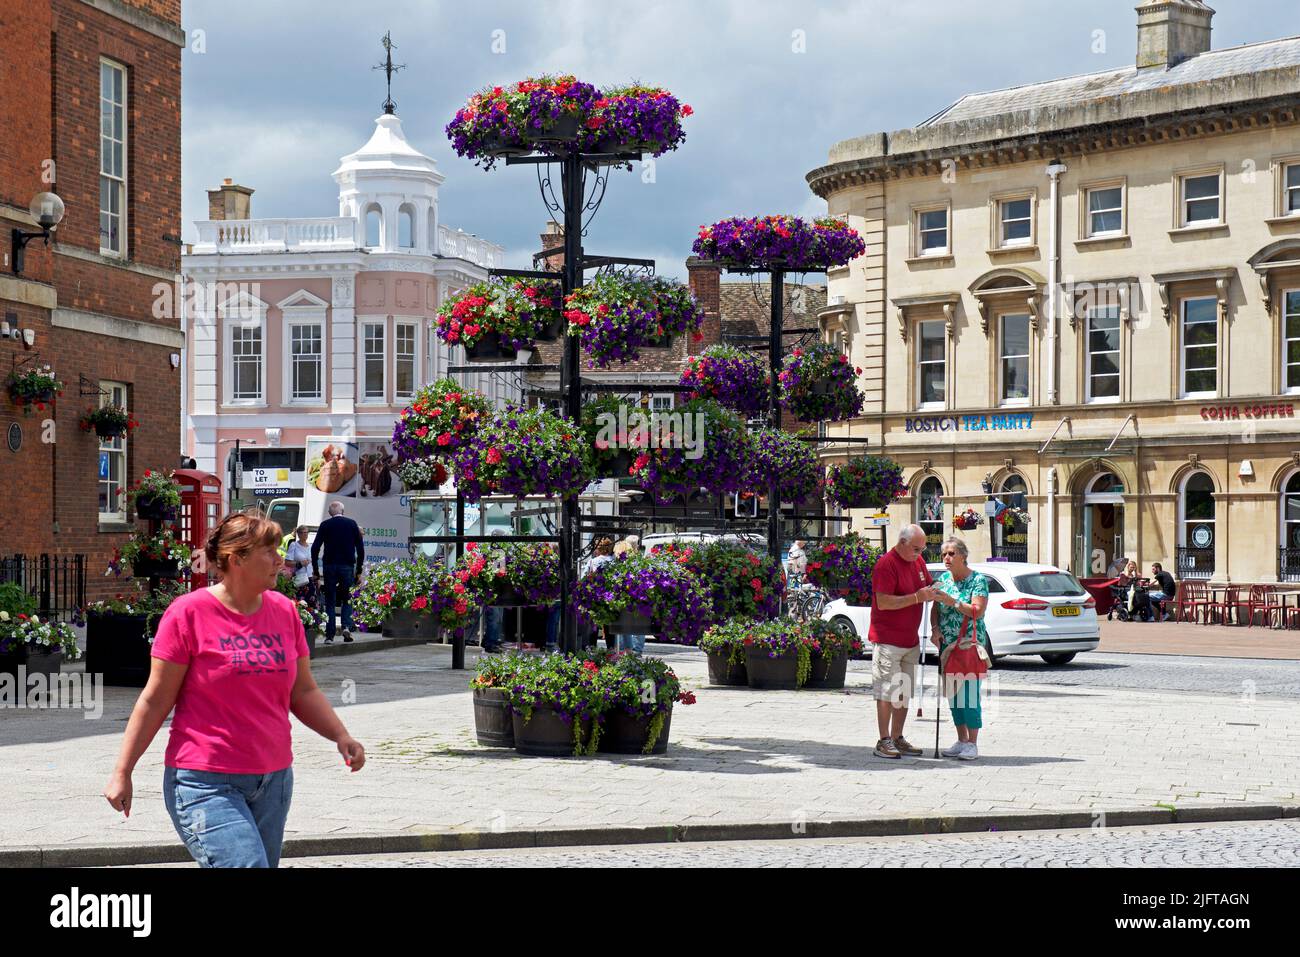 The town centre, Taunton, Somerset, England UK Stock Photo